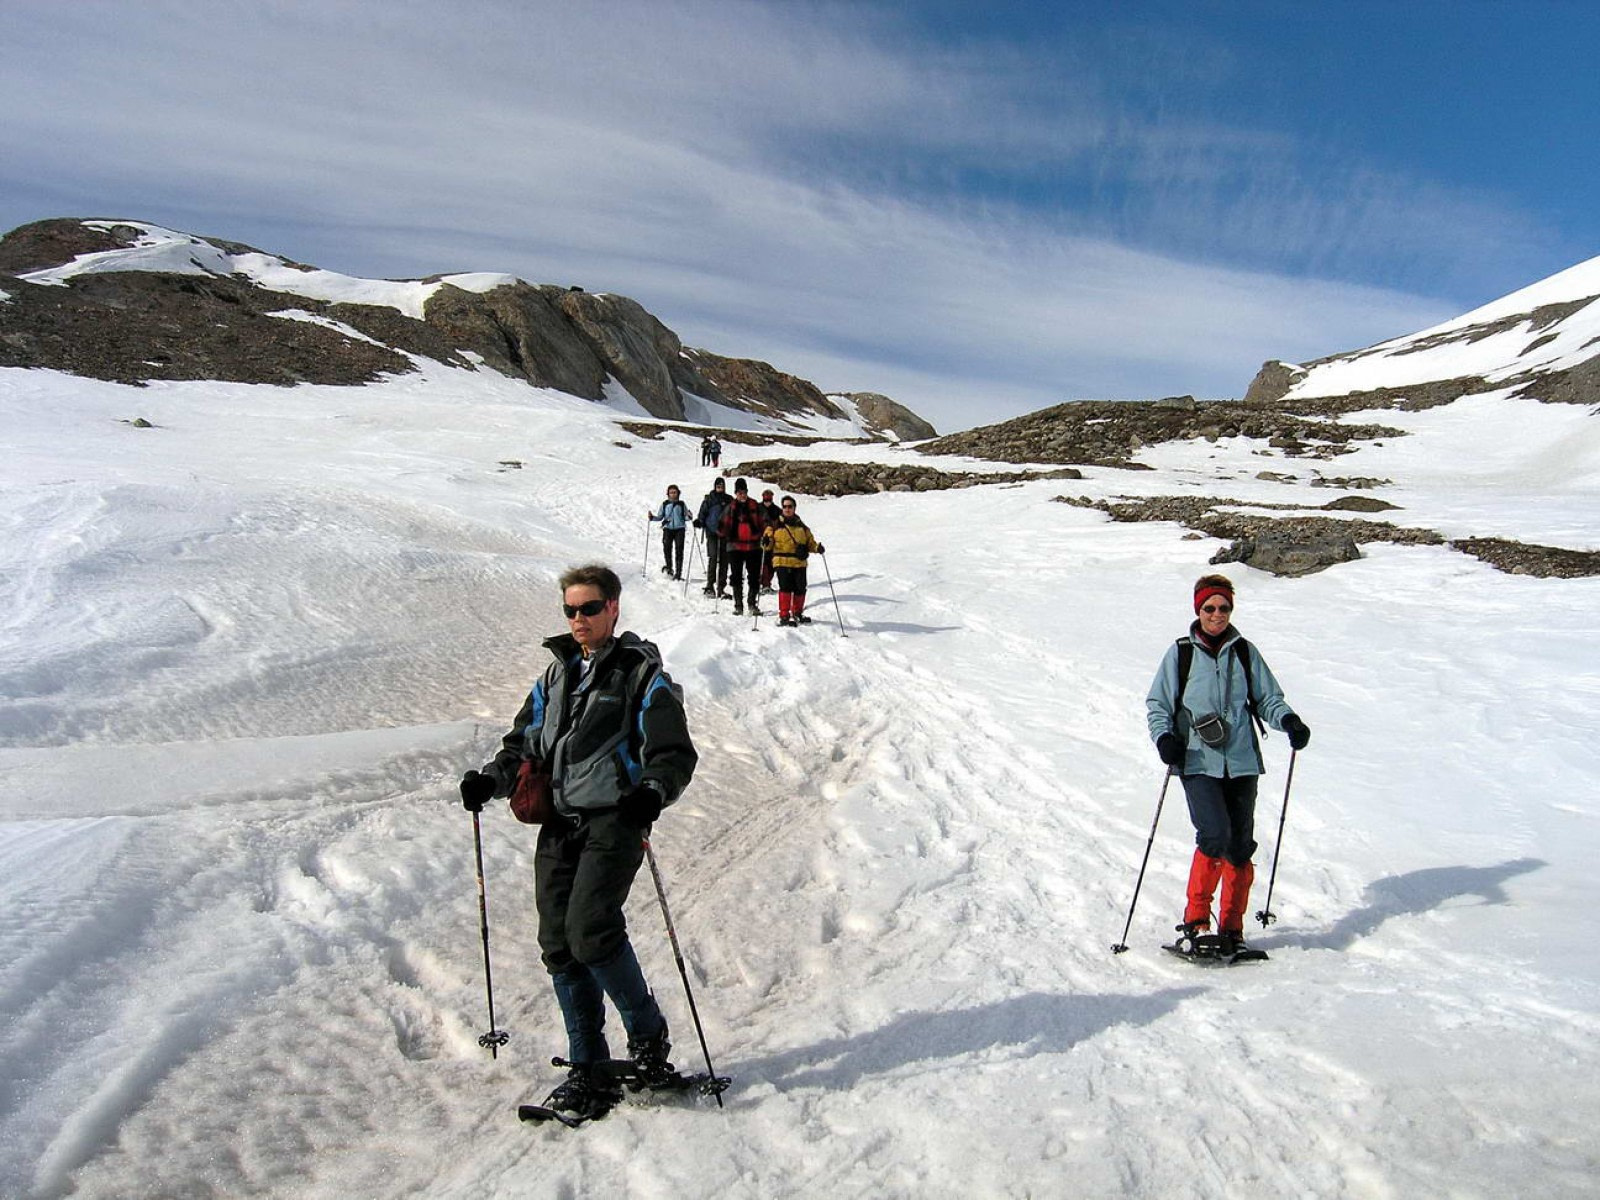 Snowshoeing makes it easier to walk through deep snow